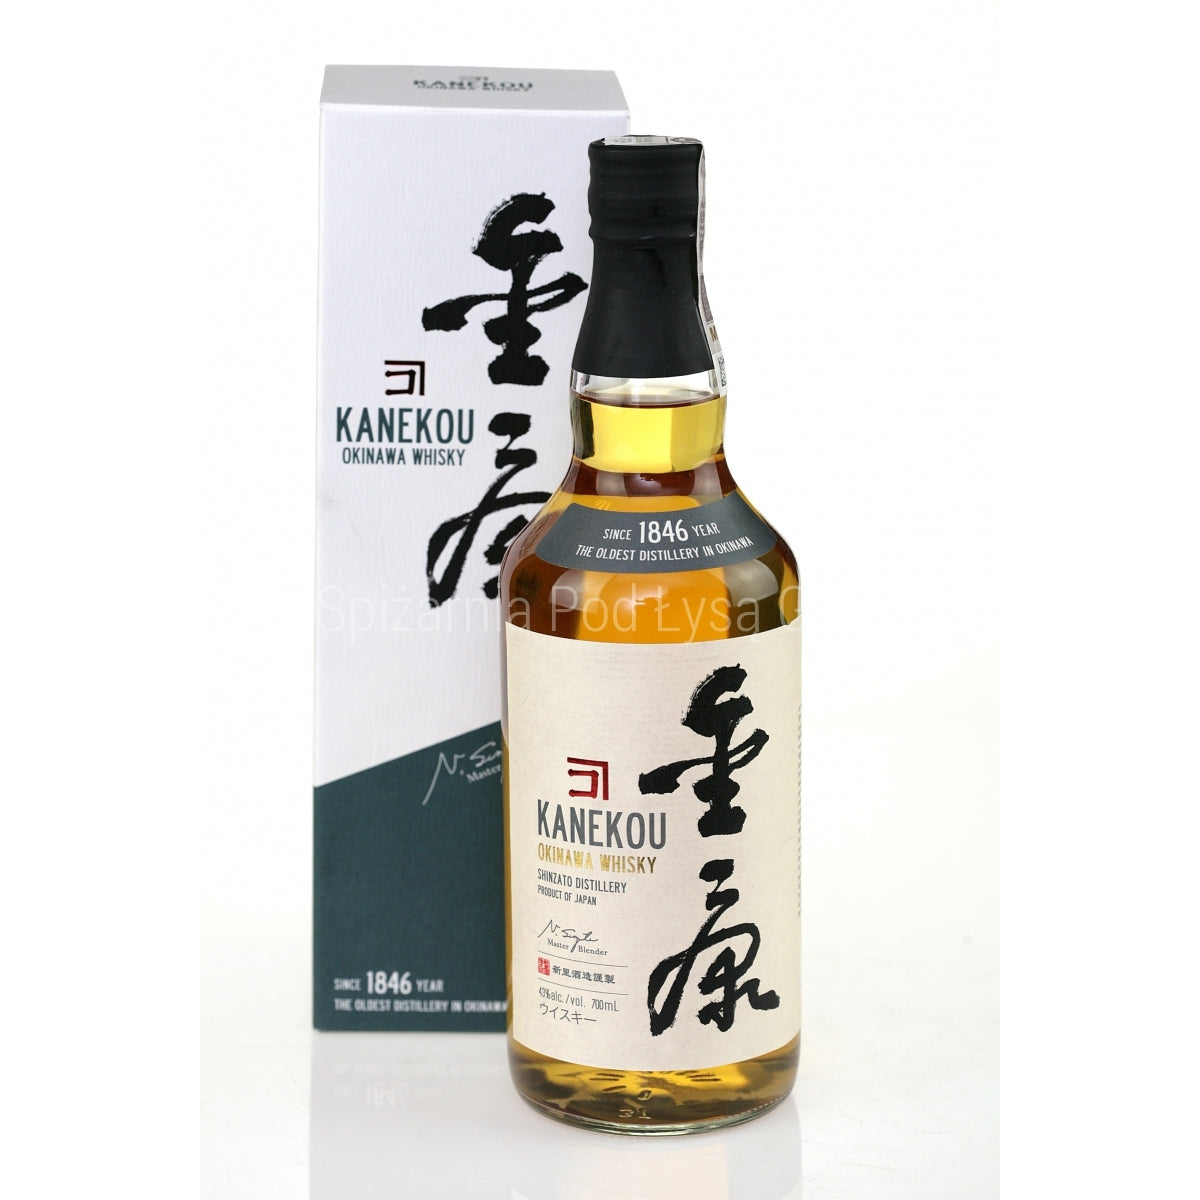 Kanekou Okinawa Blended Whisky 43% Vol. 0,7l in Giftbox